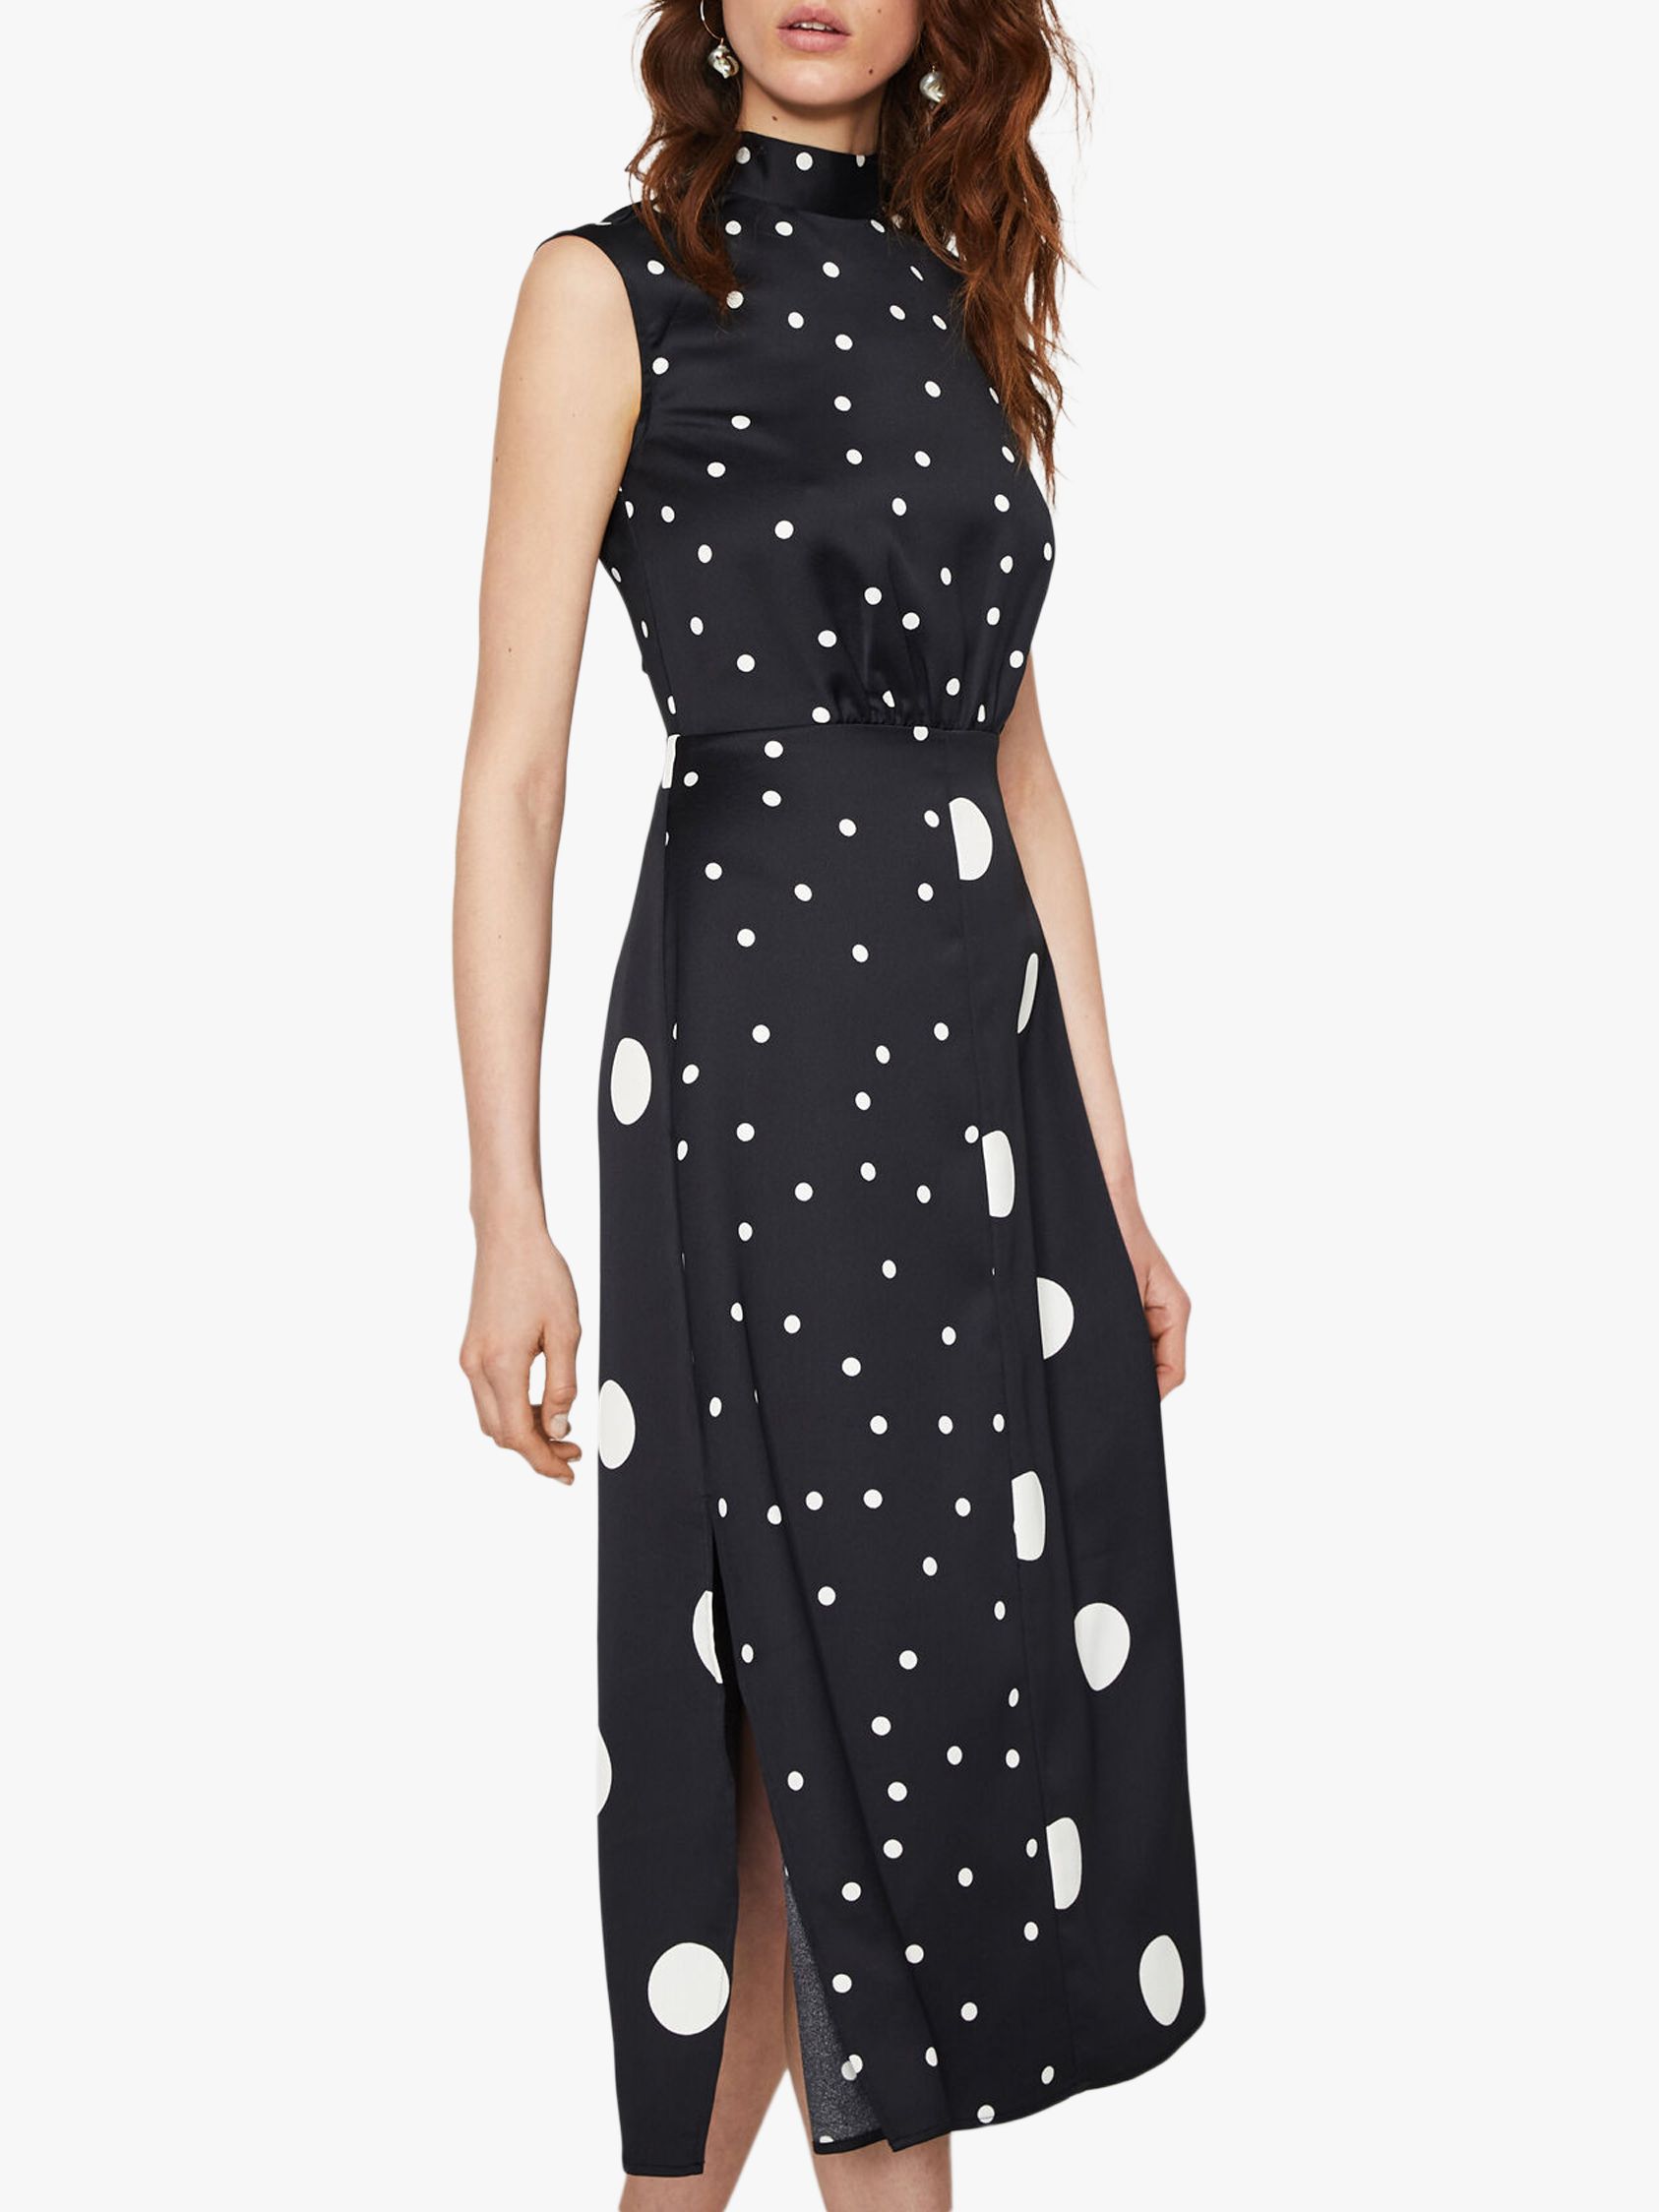 warehouse black polka dot dress